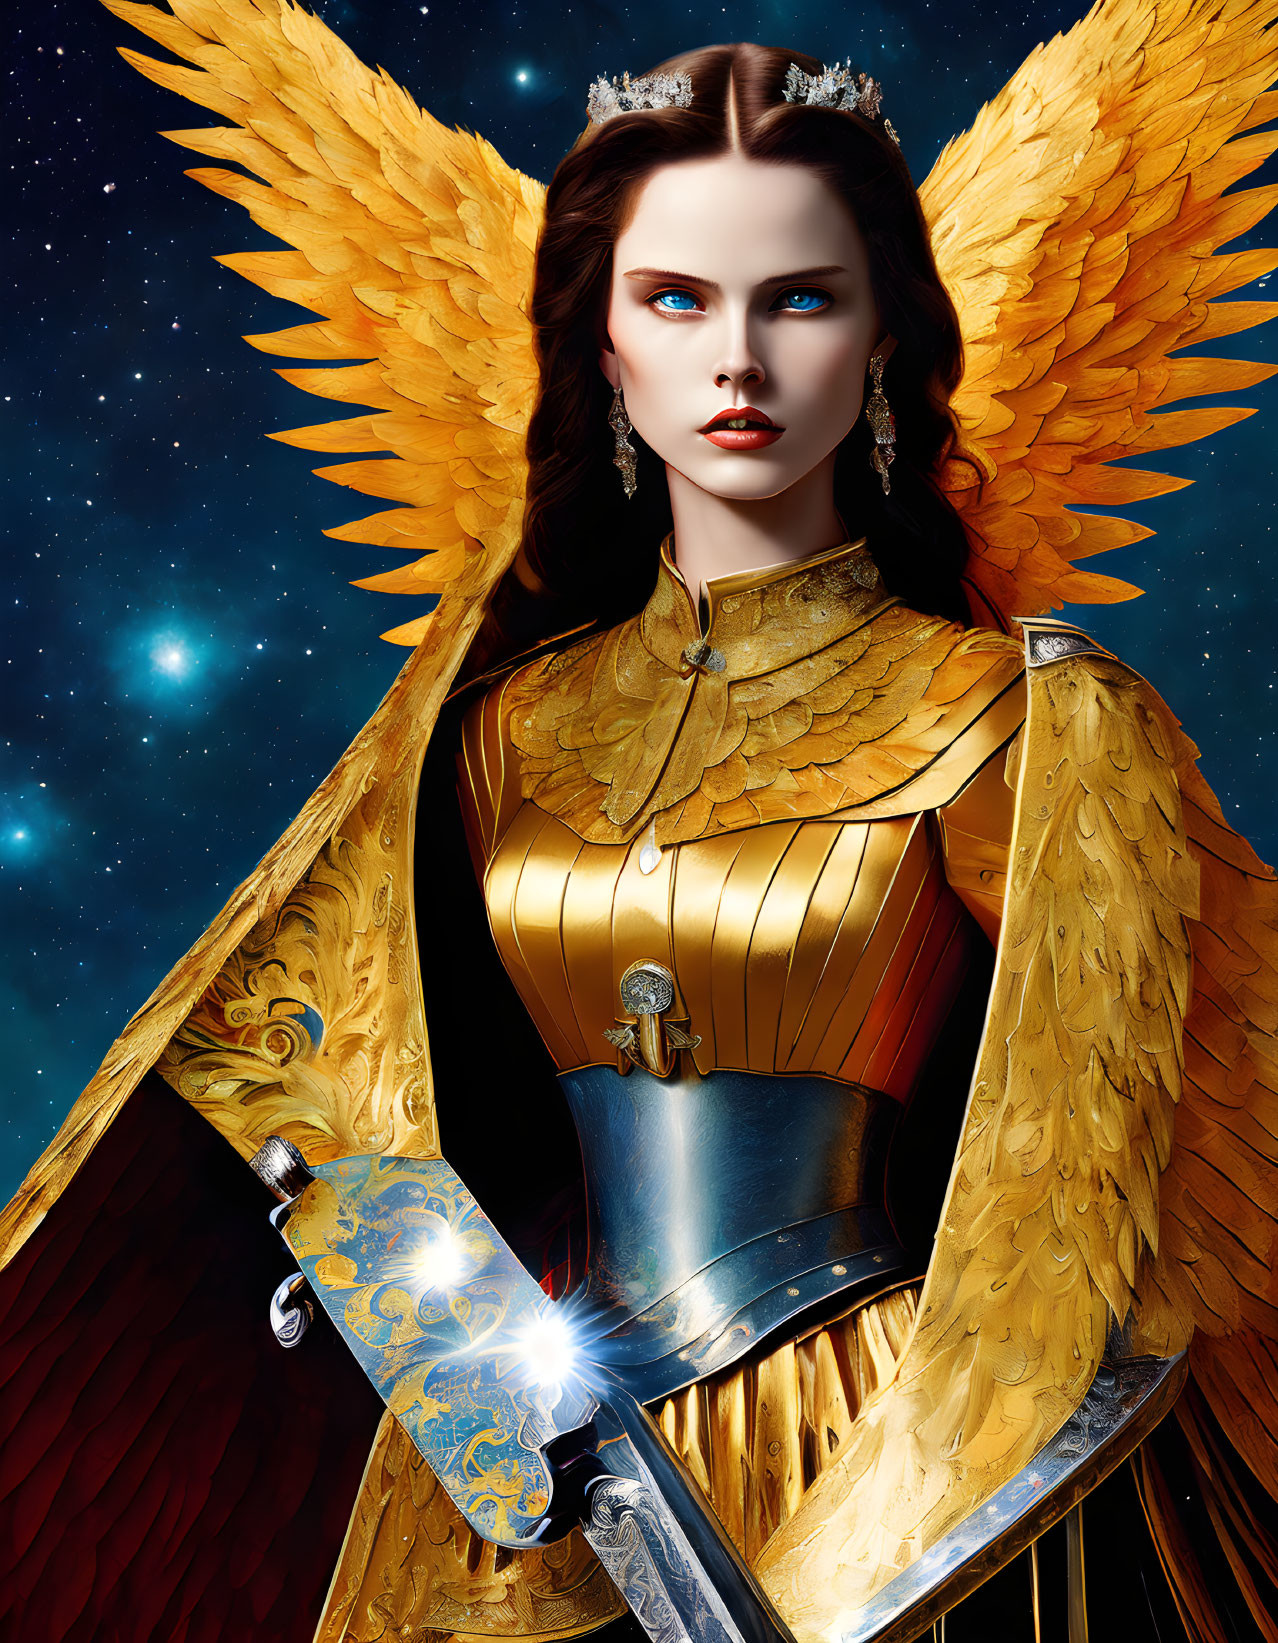 Warrior woman digital artwork: golden wings, armor, glowing sword, starry background